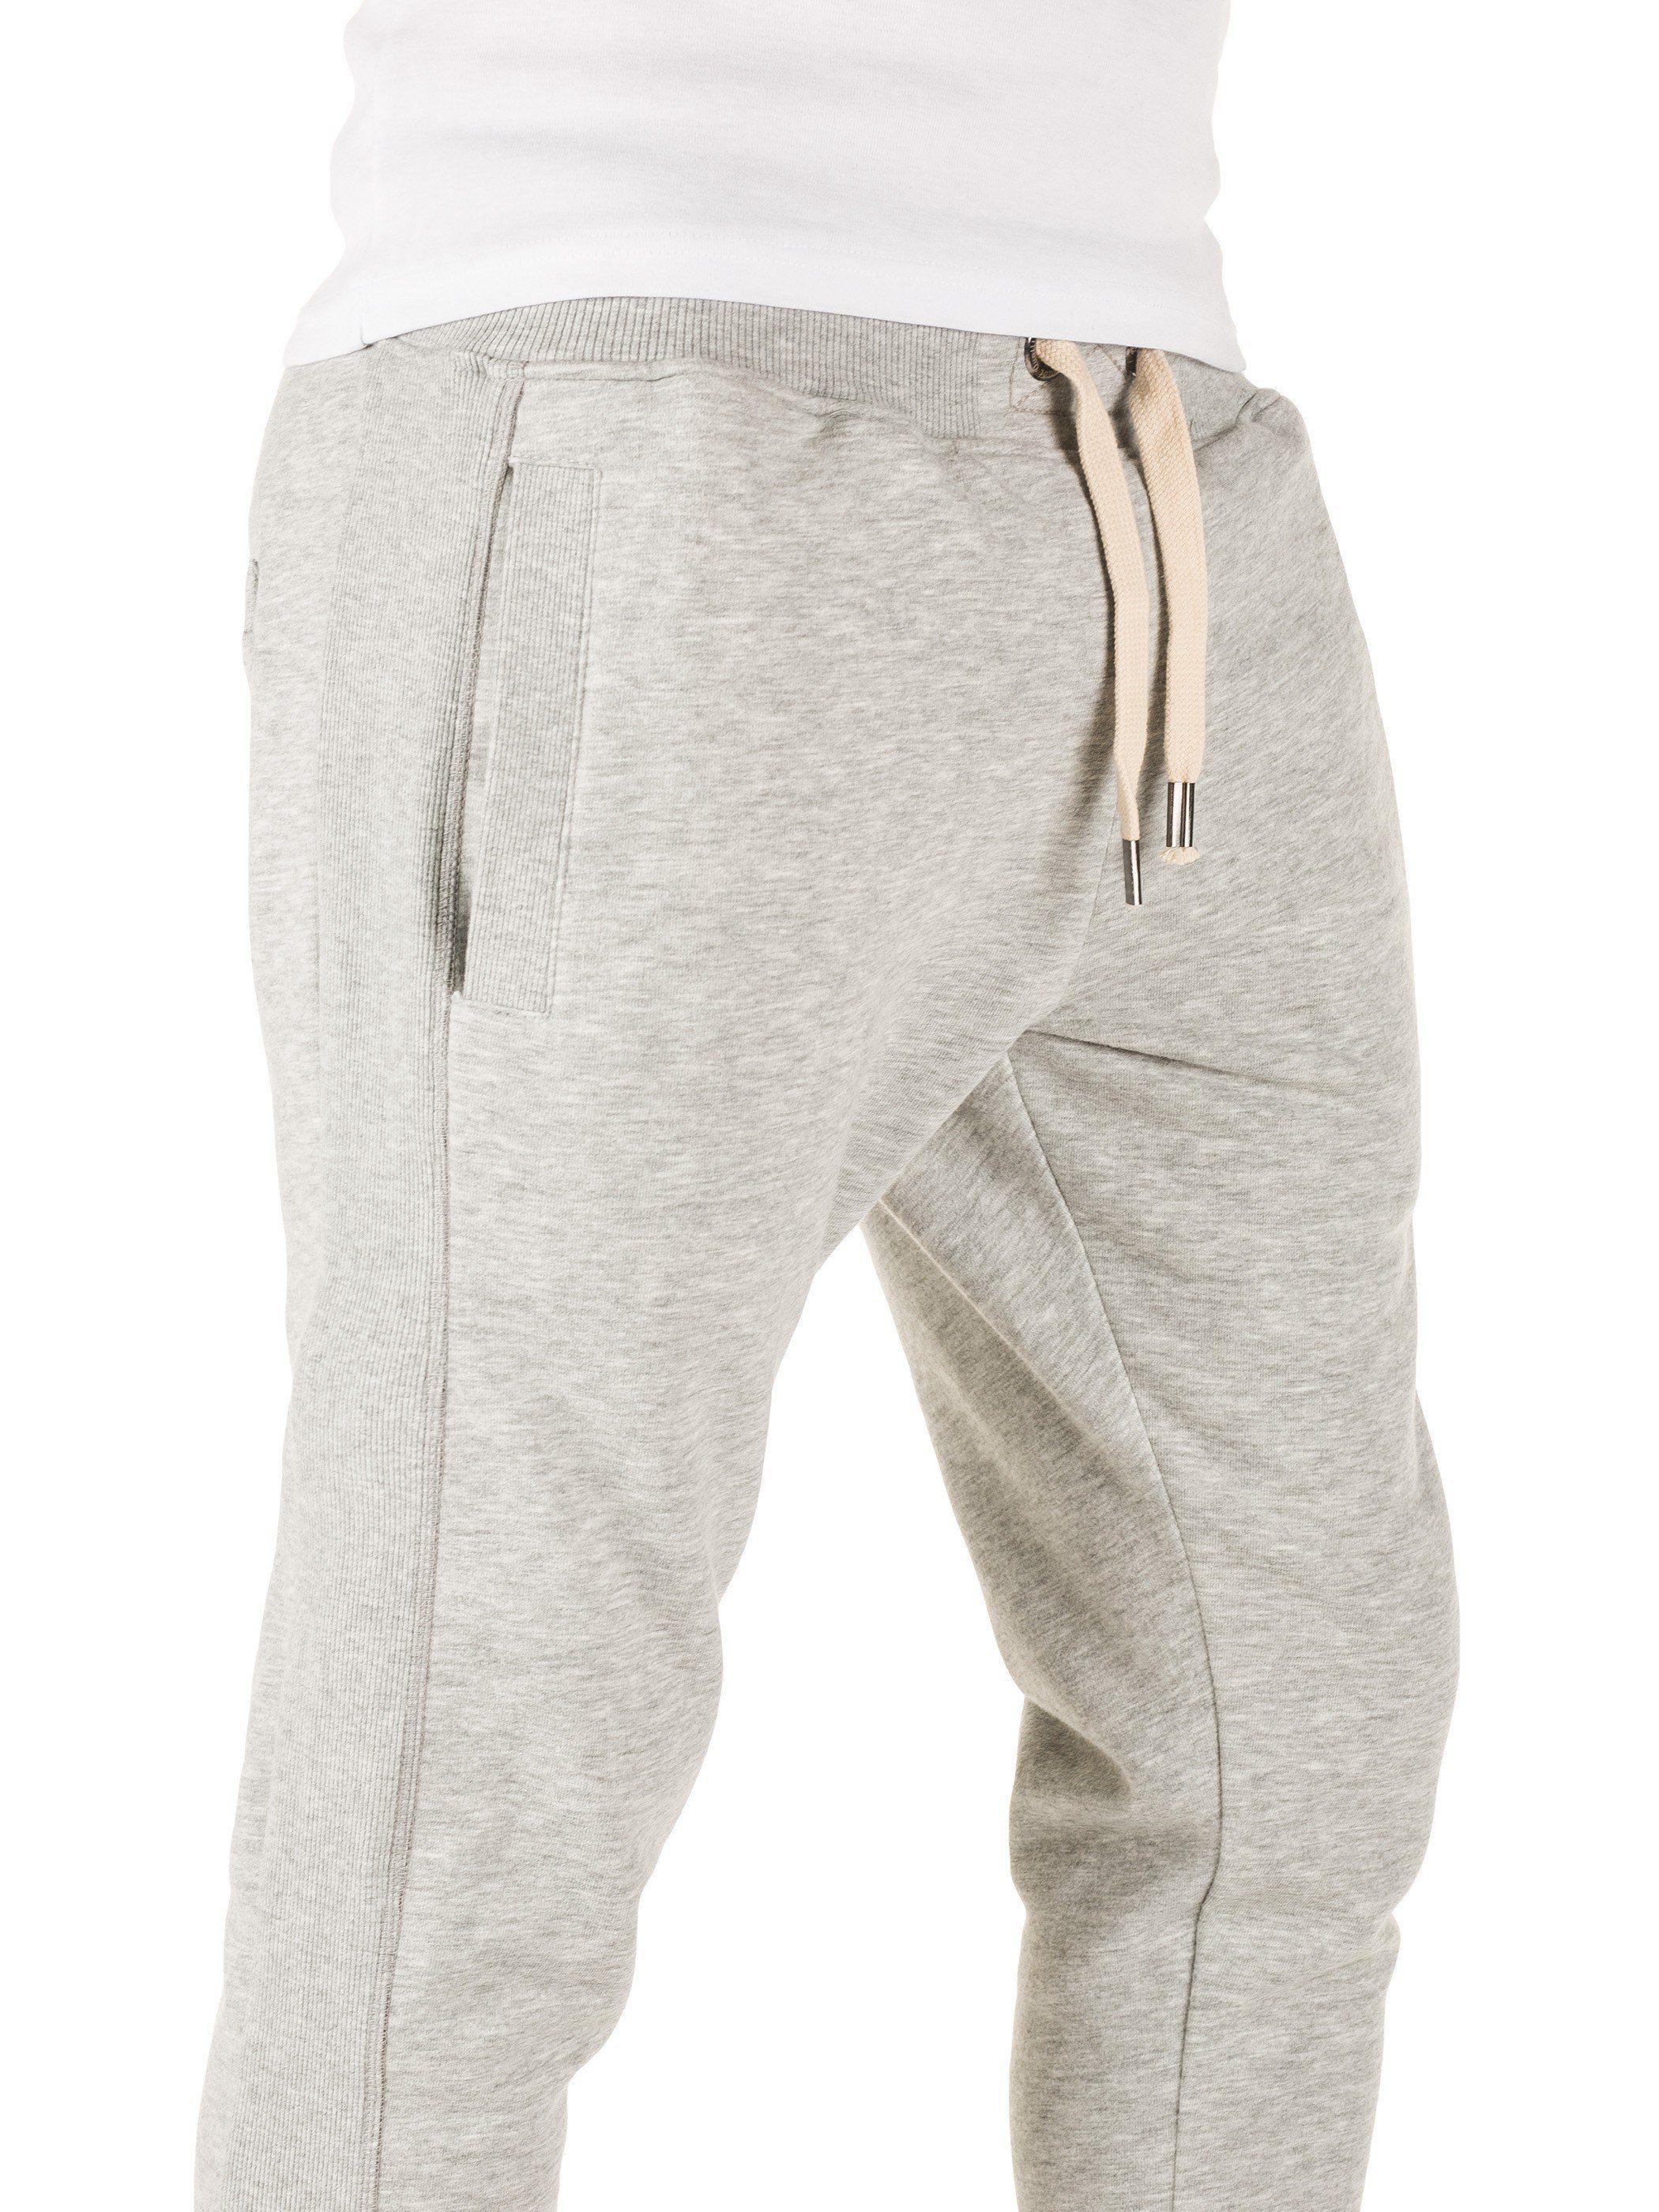 Yazubi Jogginghose Sweatpants mit (mirage Kordelzug 154703) Grau in Unifarbe mit Bund elastischem Edward gray